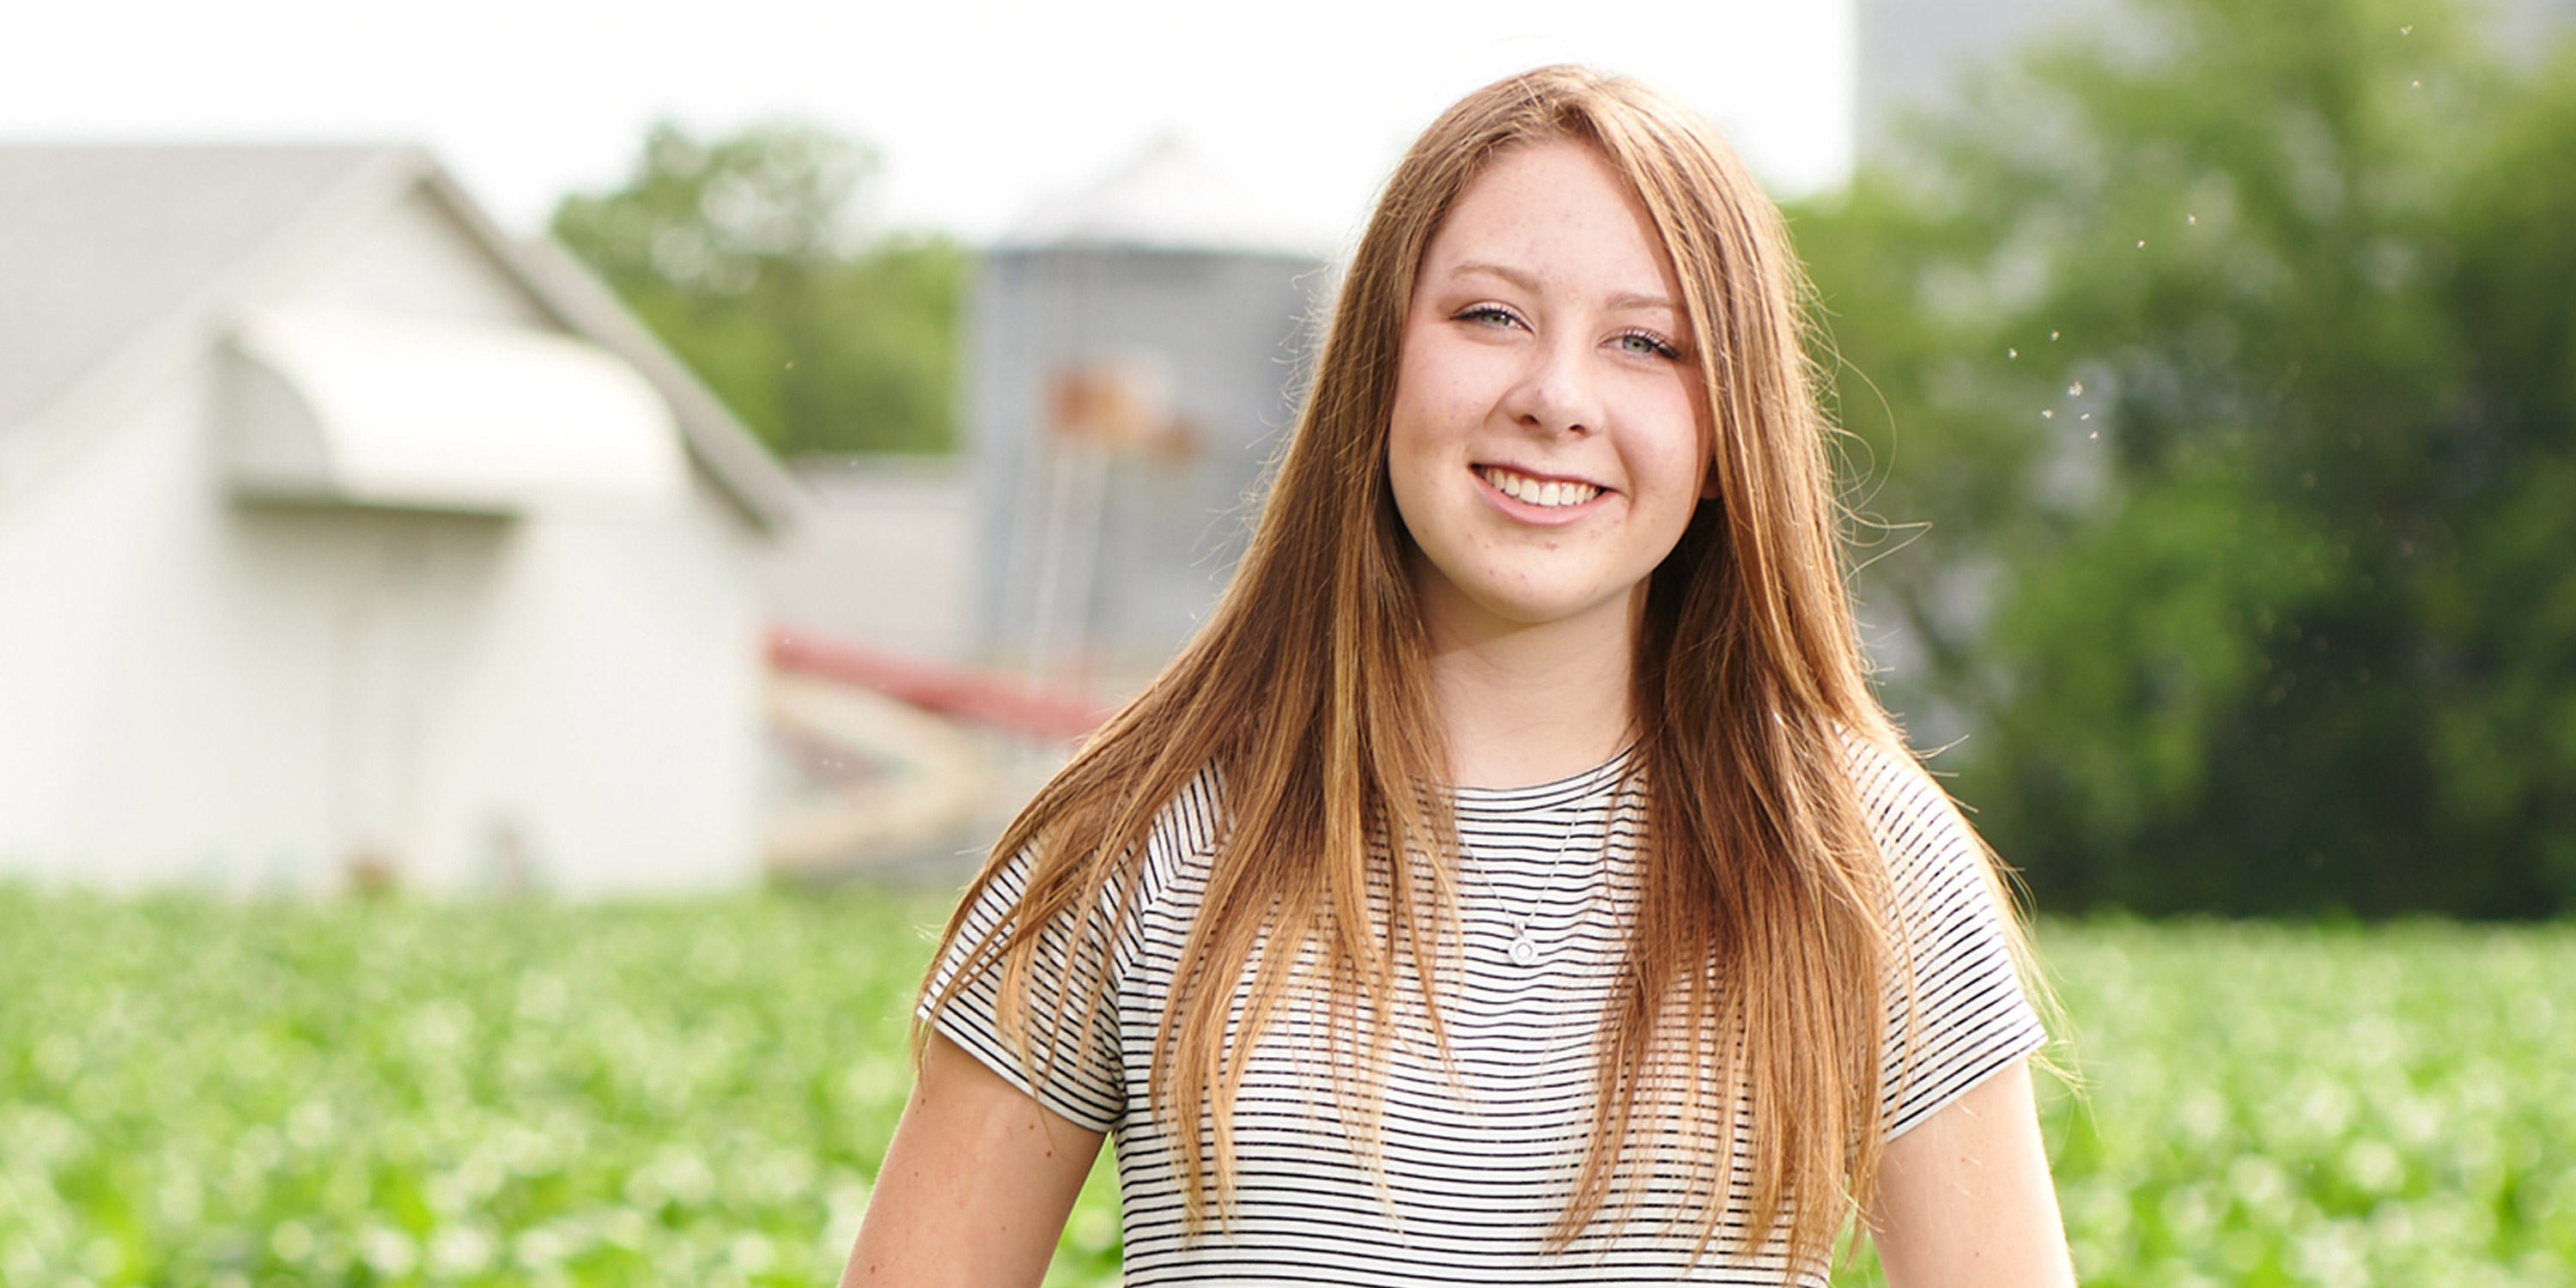 Manitoba Pork online marketing campaign features Olivia Penner, future generation Manitoba hog farmer